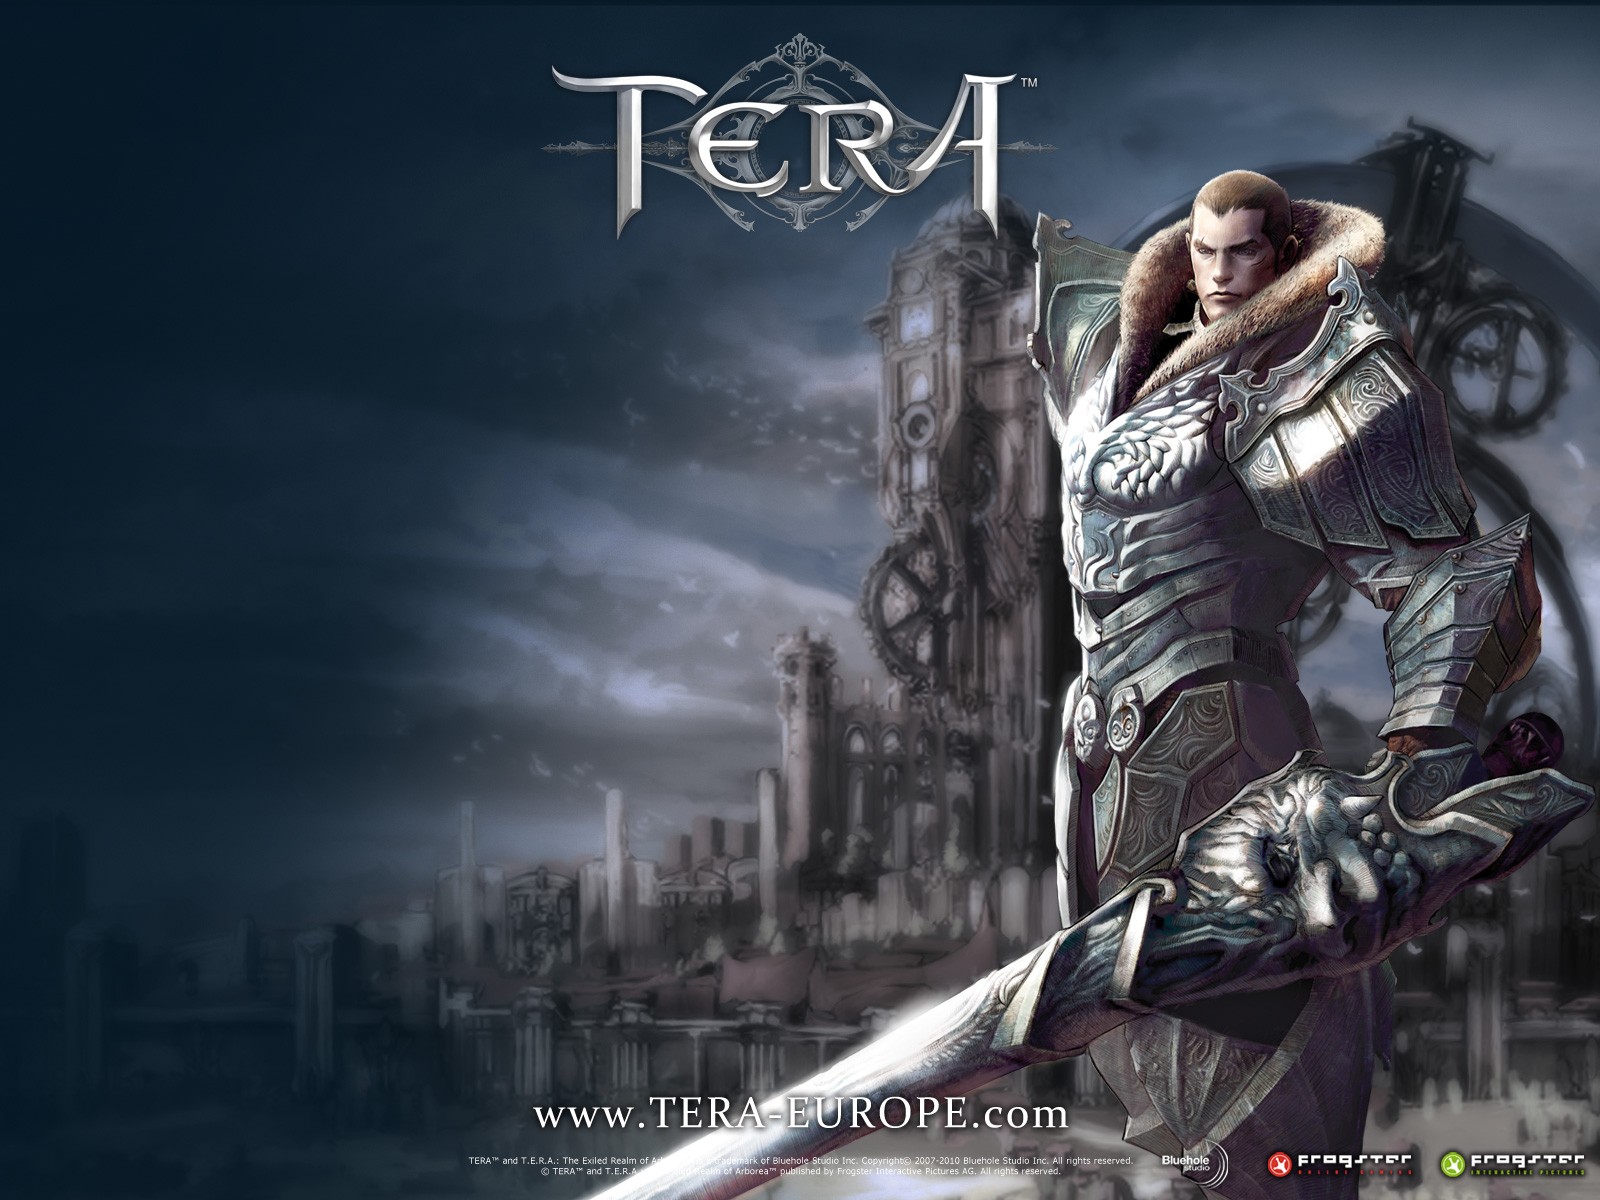  Belika  Free TERA Online Wallpaper Gallery   Best Game Wallpapers